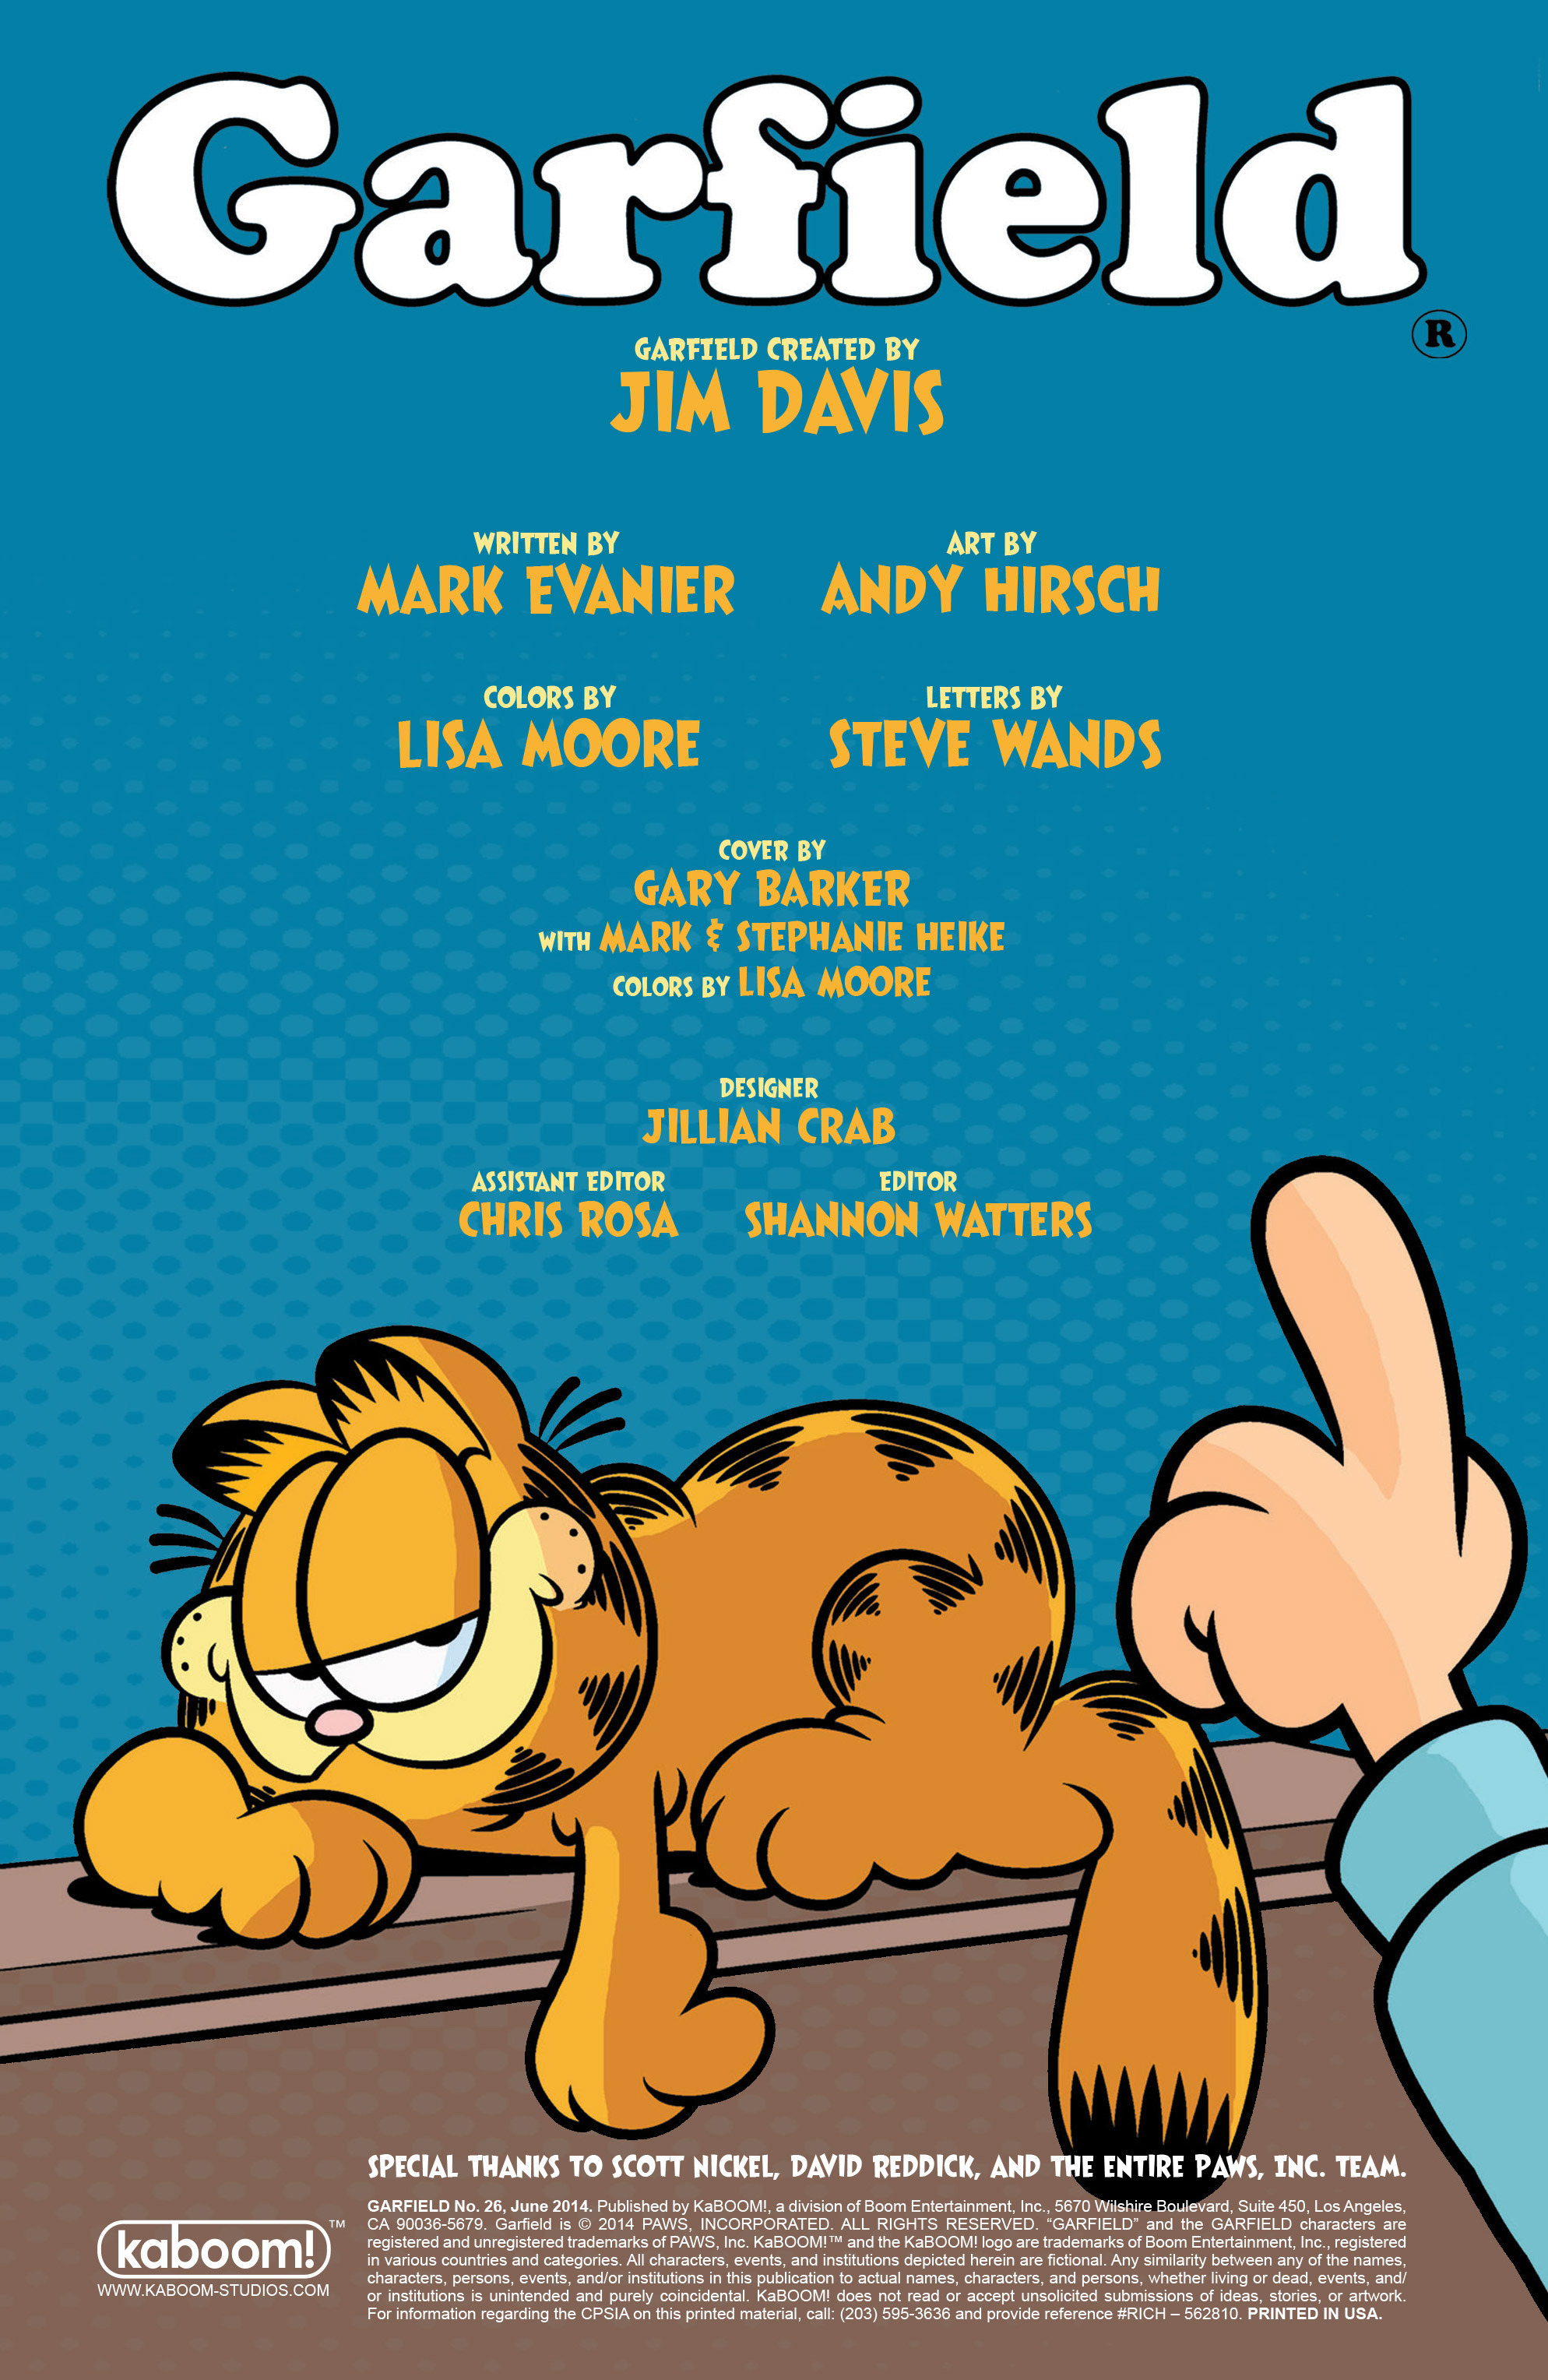 Read online Garfield comic -  Issue #26 - 2